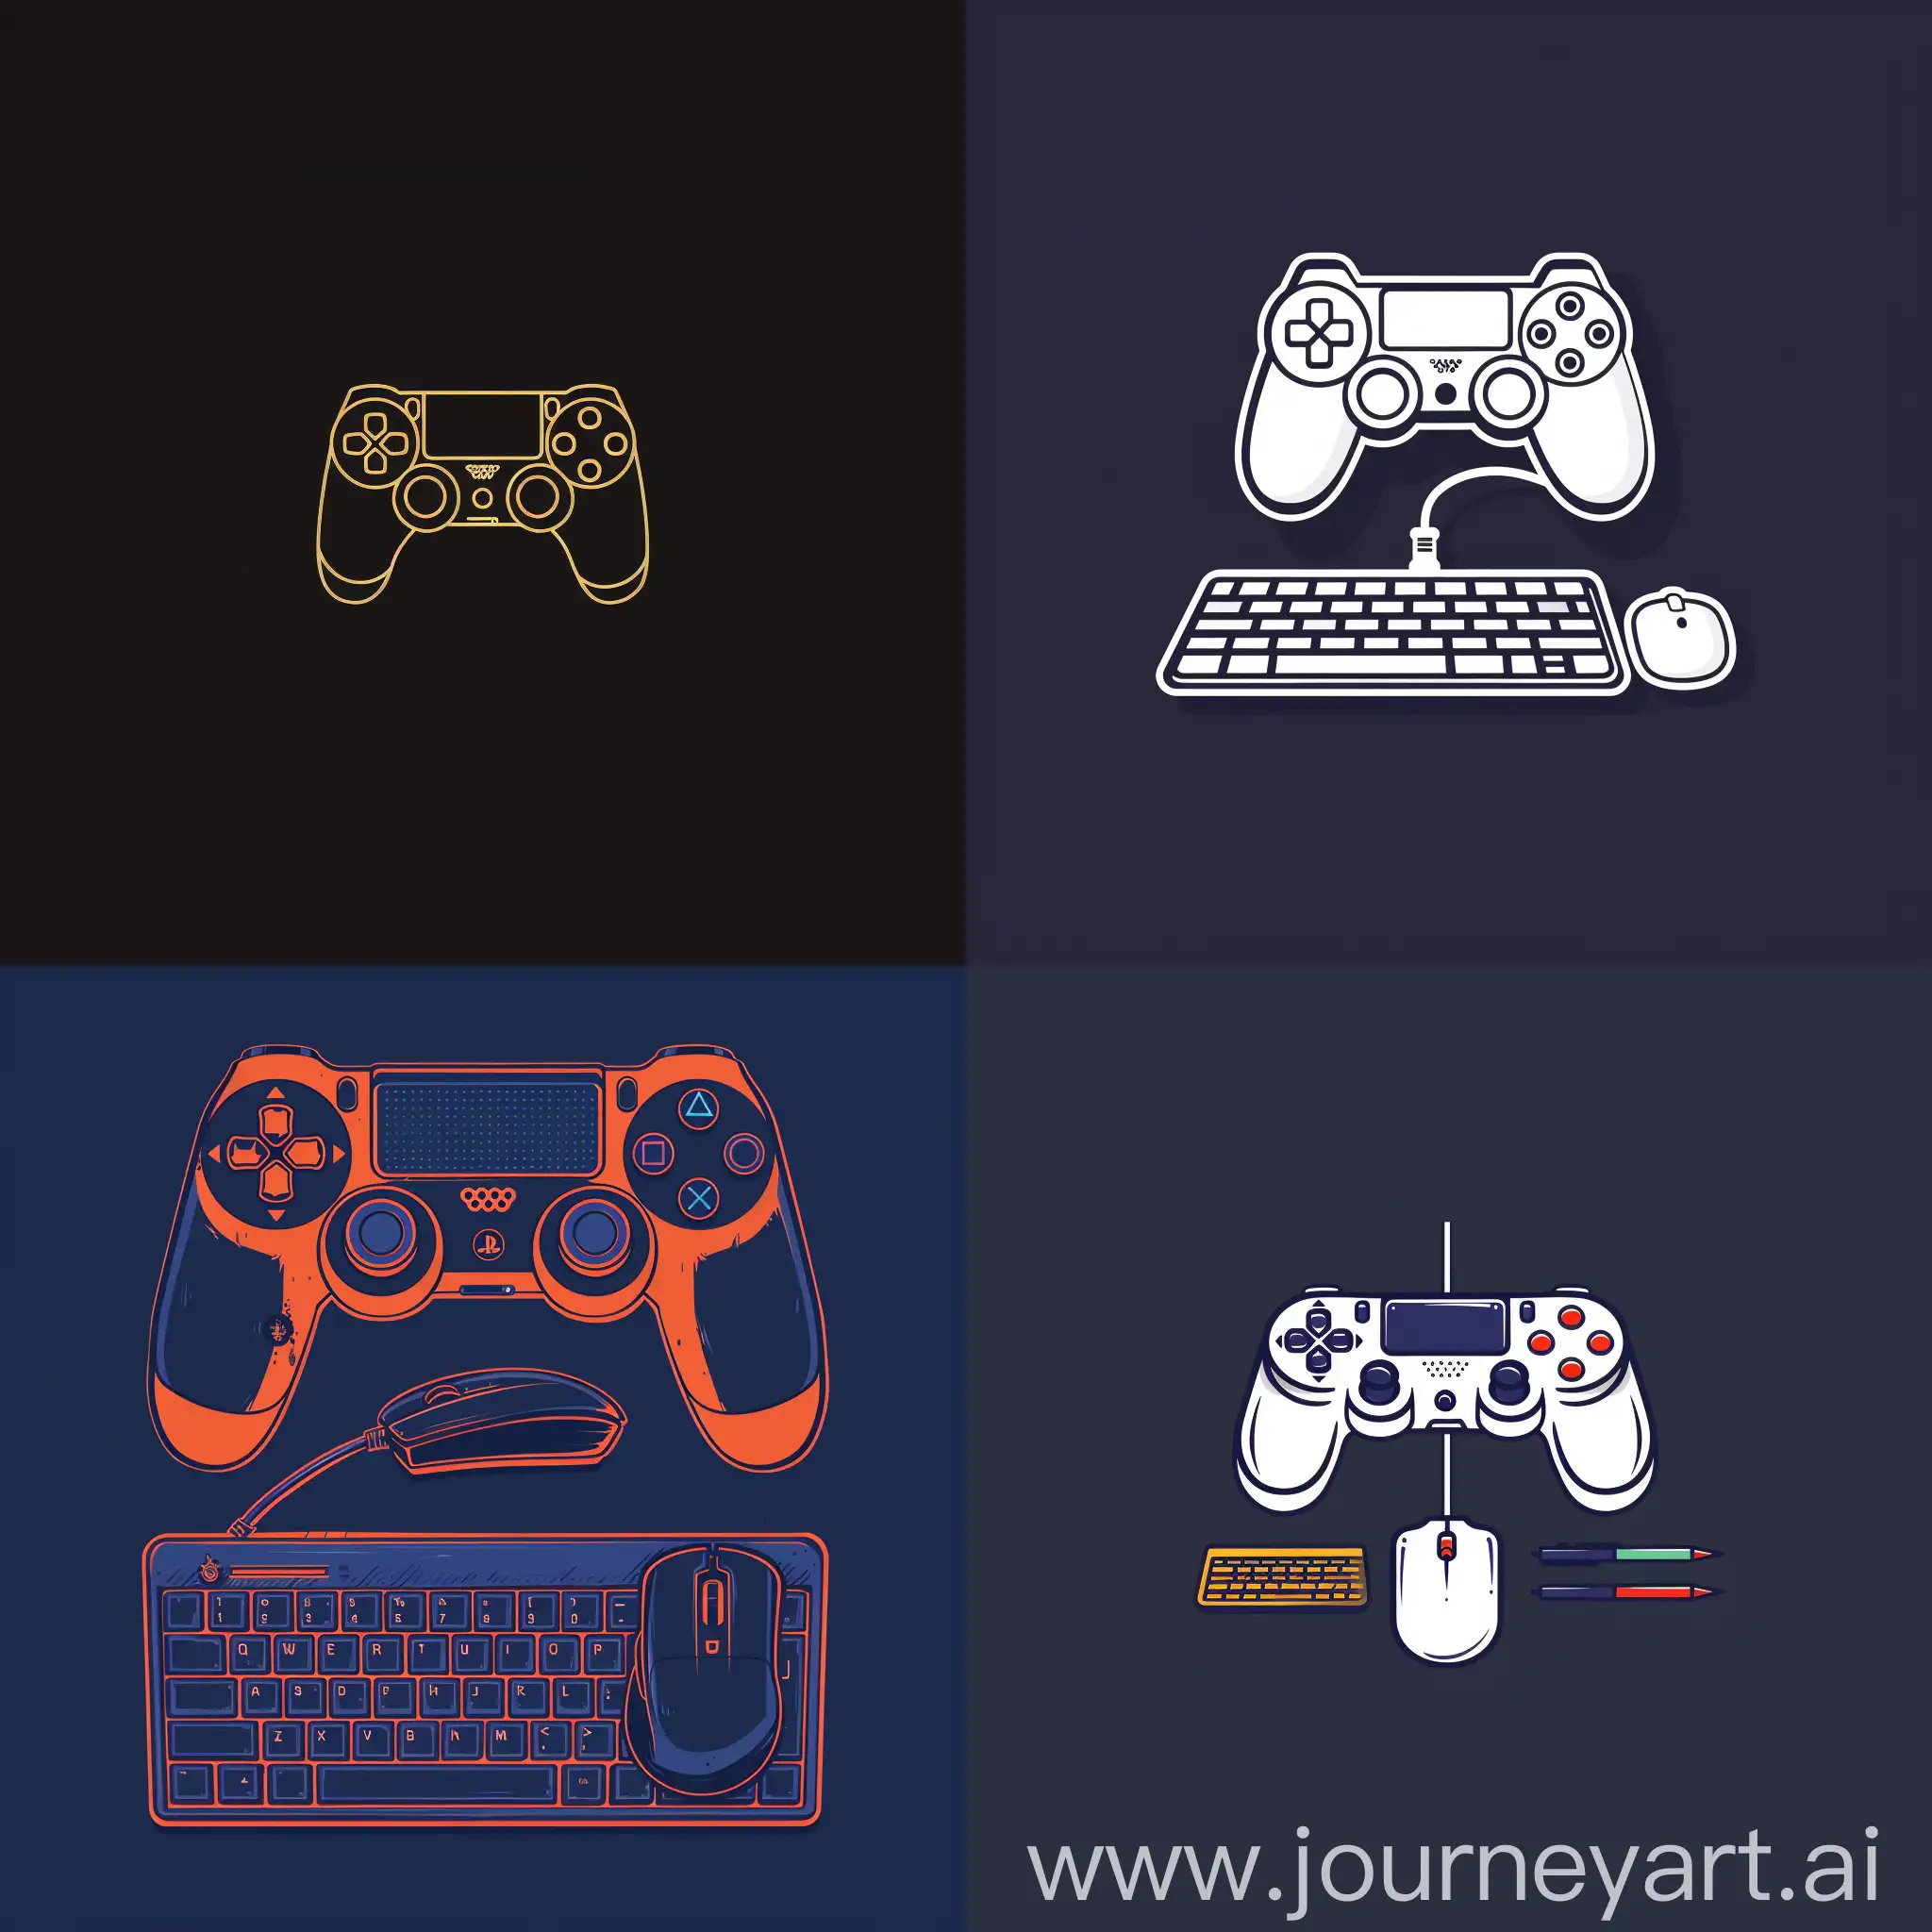 Minimalistic-Modern-Gaming-Setup-with-Logo-Gamepad-Mouse-and-Keyboard